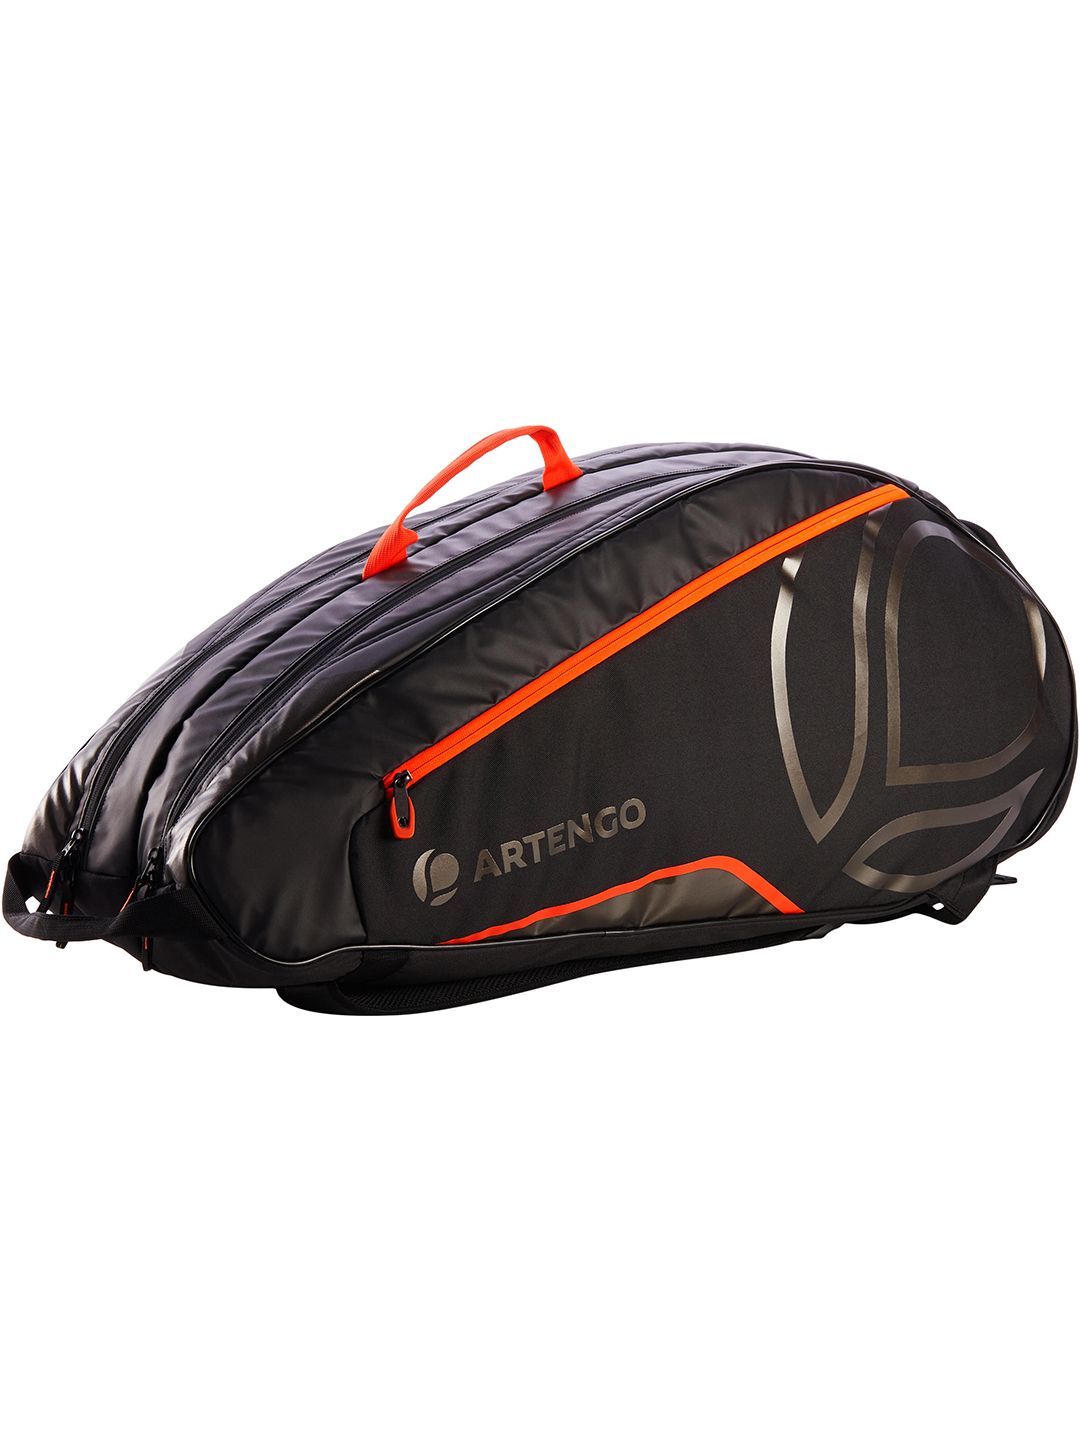 Artengo By Decathlon Unisex Black & Orange Solid Tennis Bag Price in India